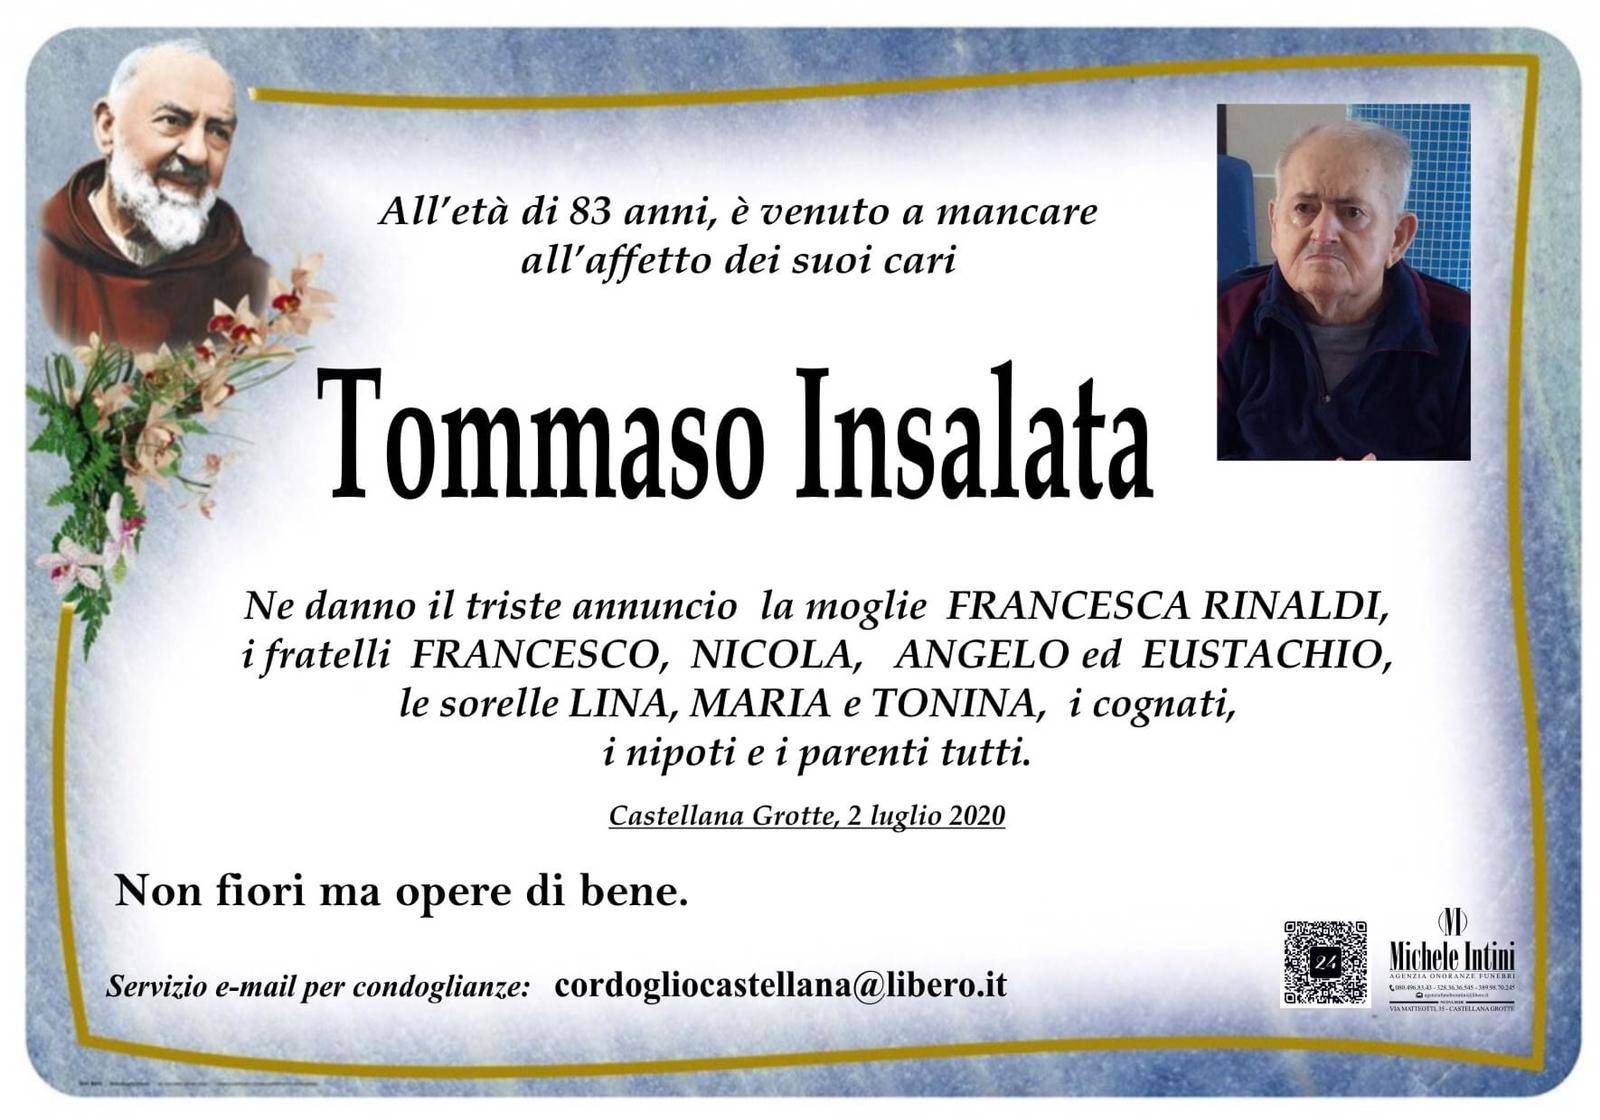 Tommaso Insalata